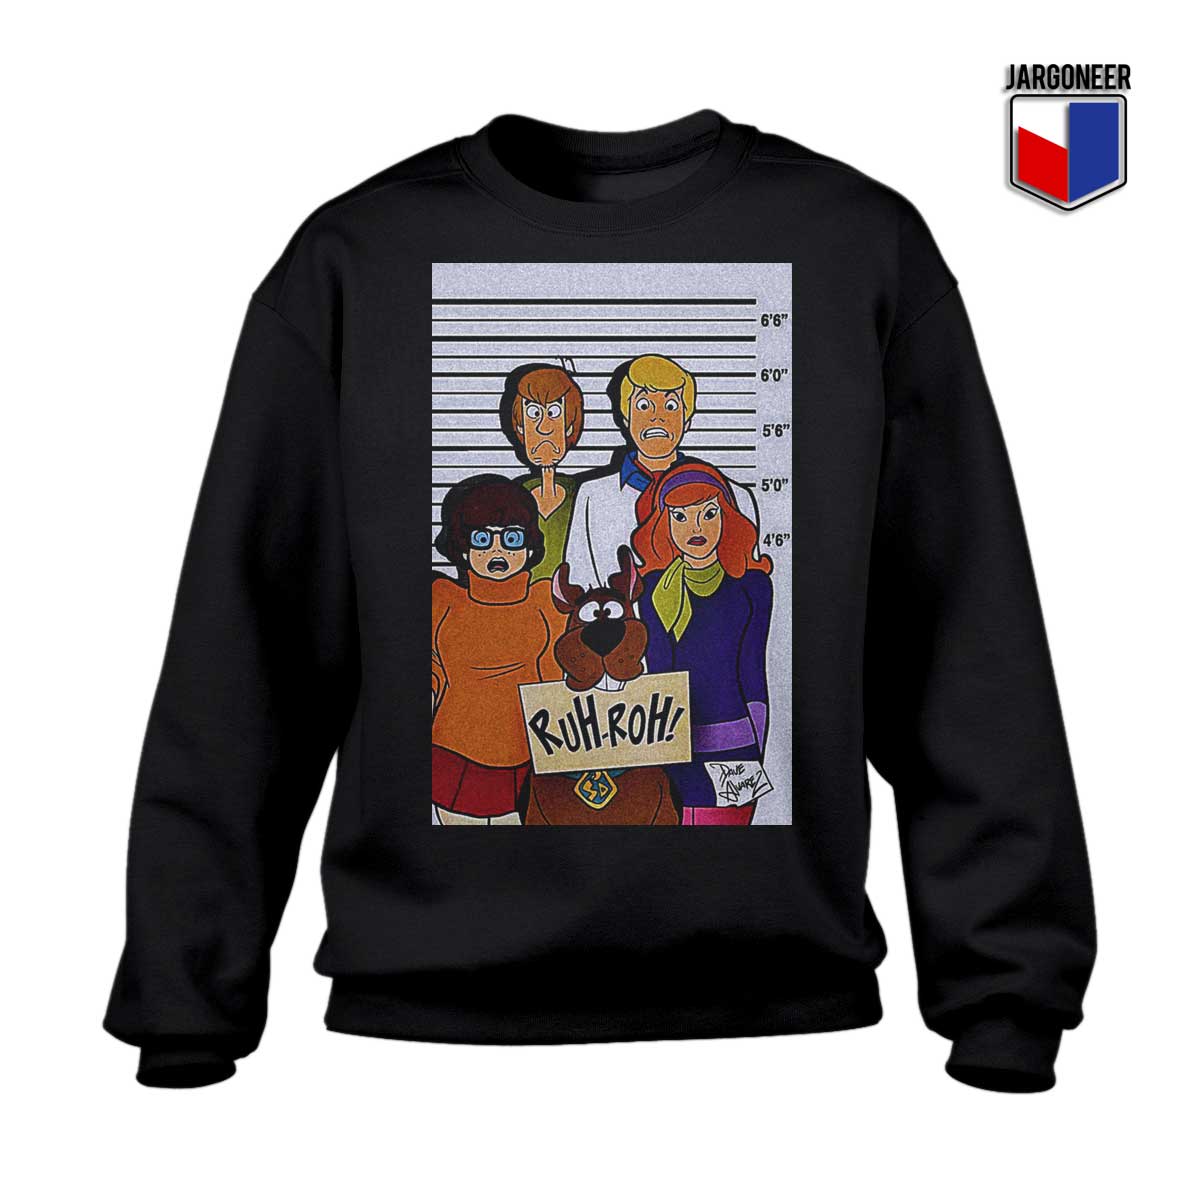 Scooby Doo Top TV Show Sweatshirt - Shop Unique Graphic Cool Shirt Designs